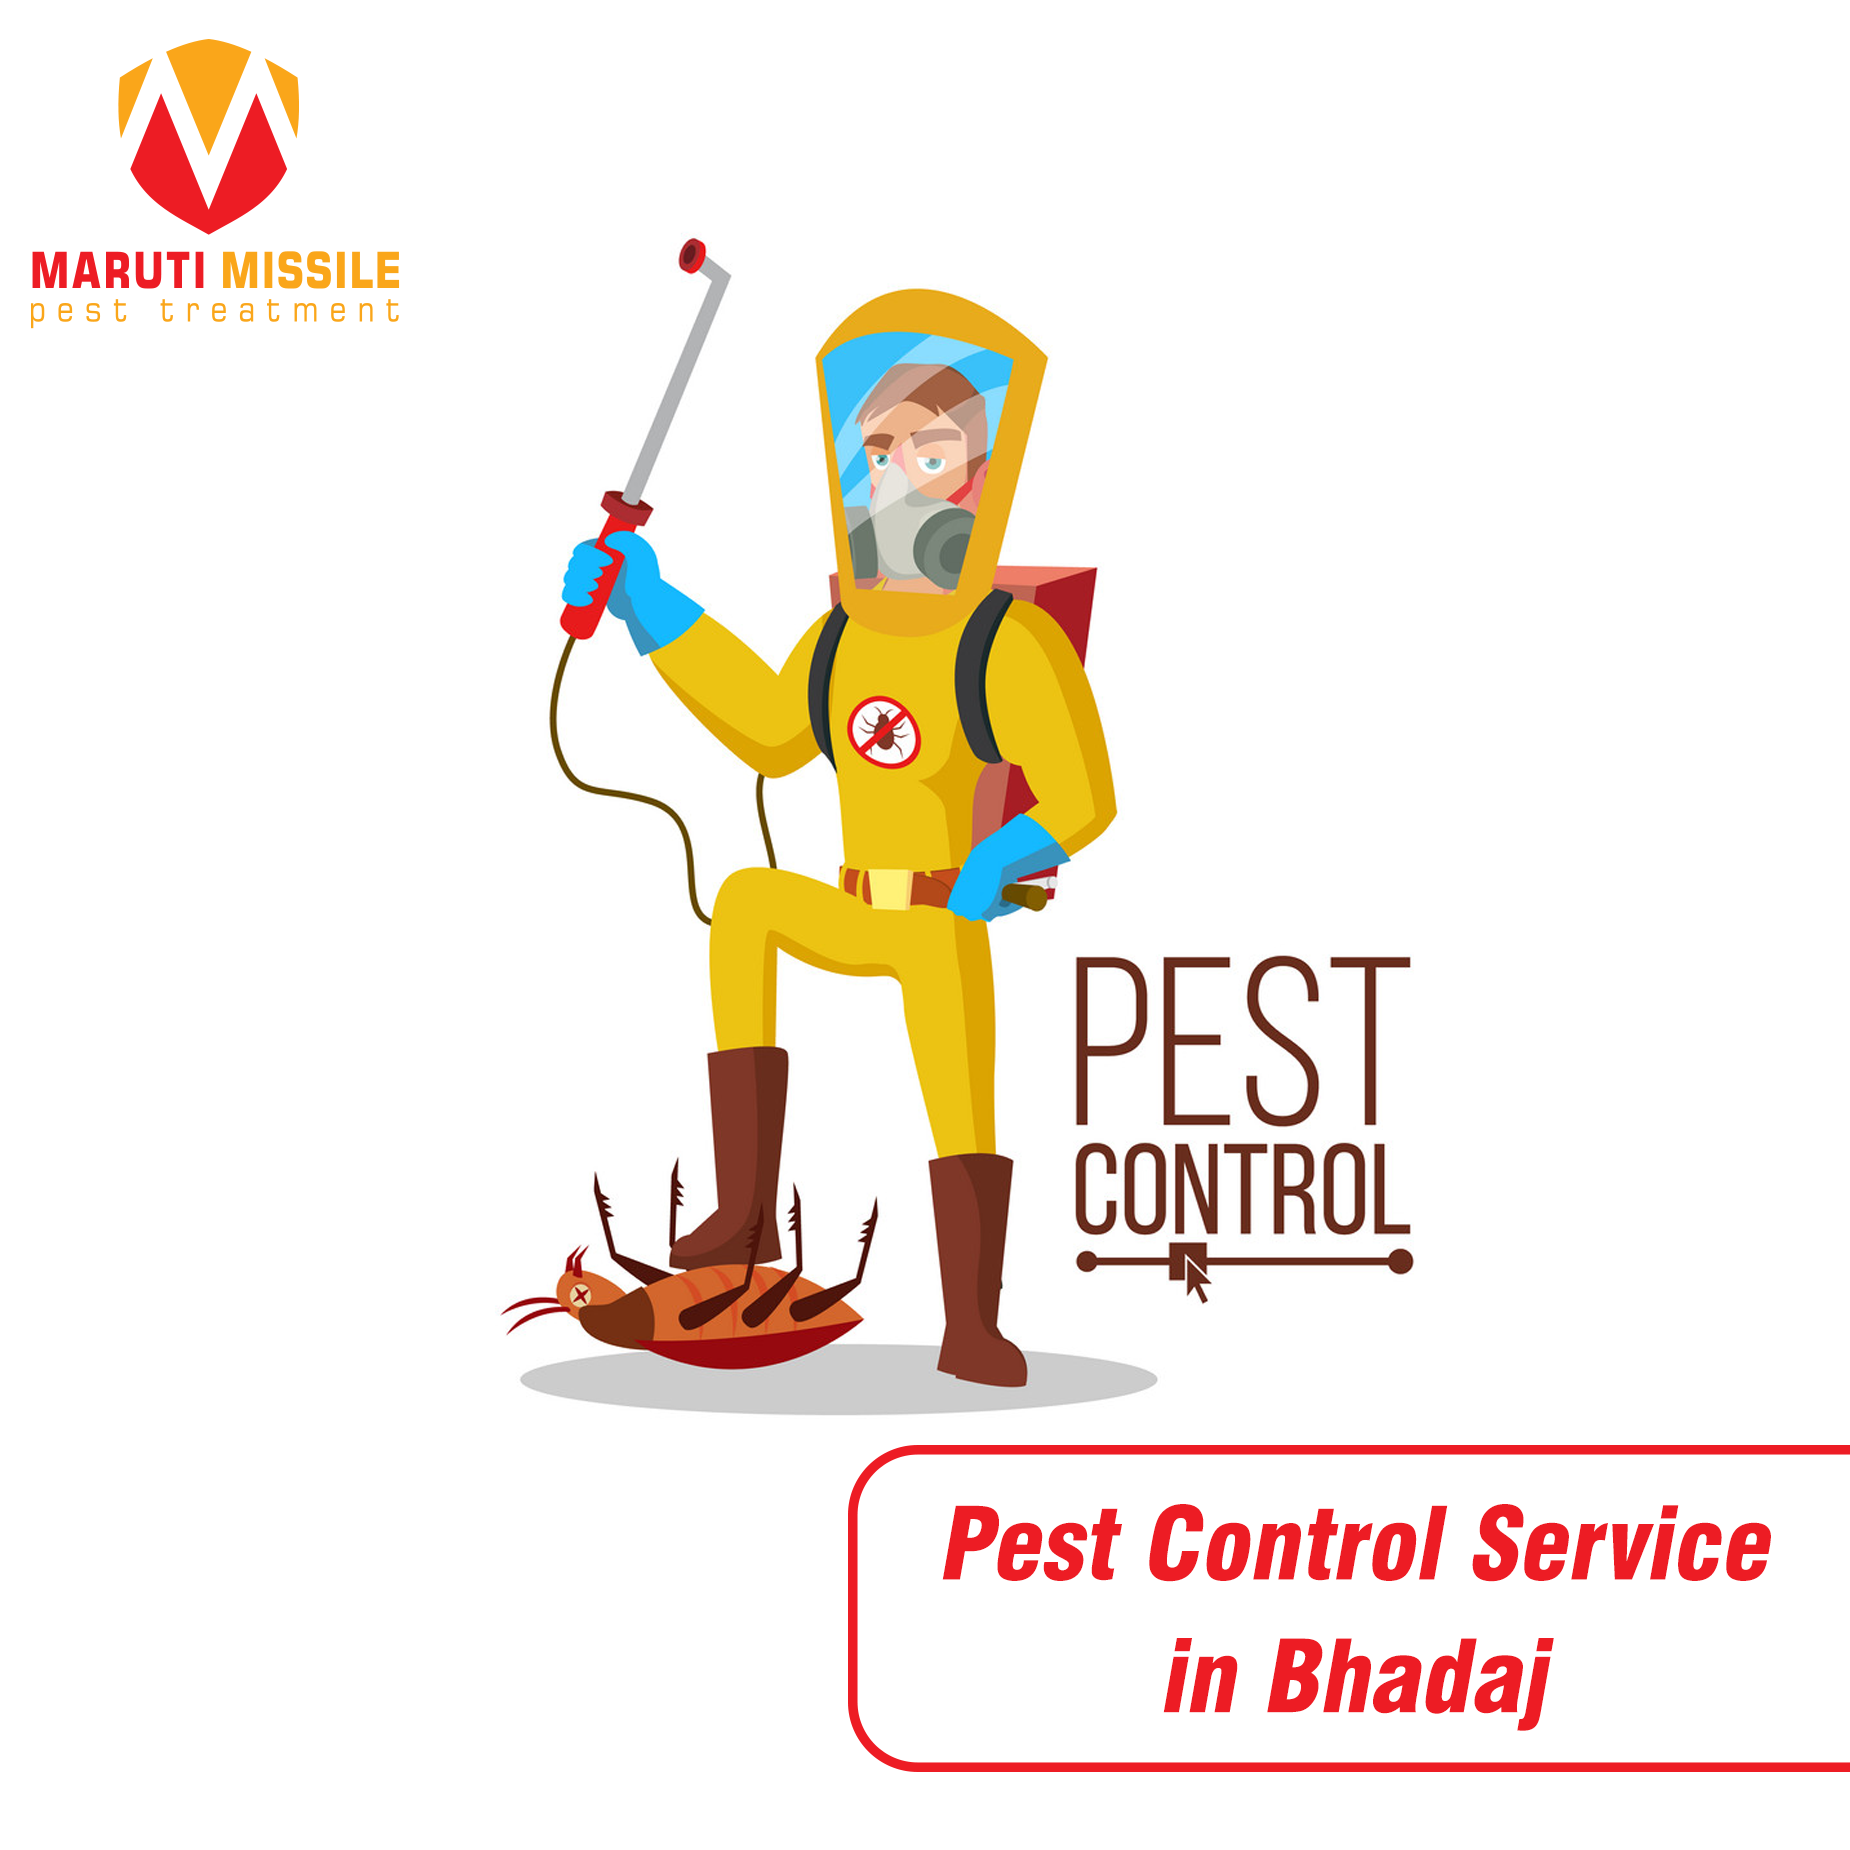 Pest Control Service in Bhadaj